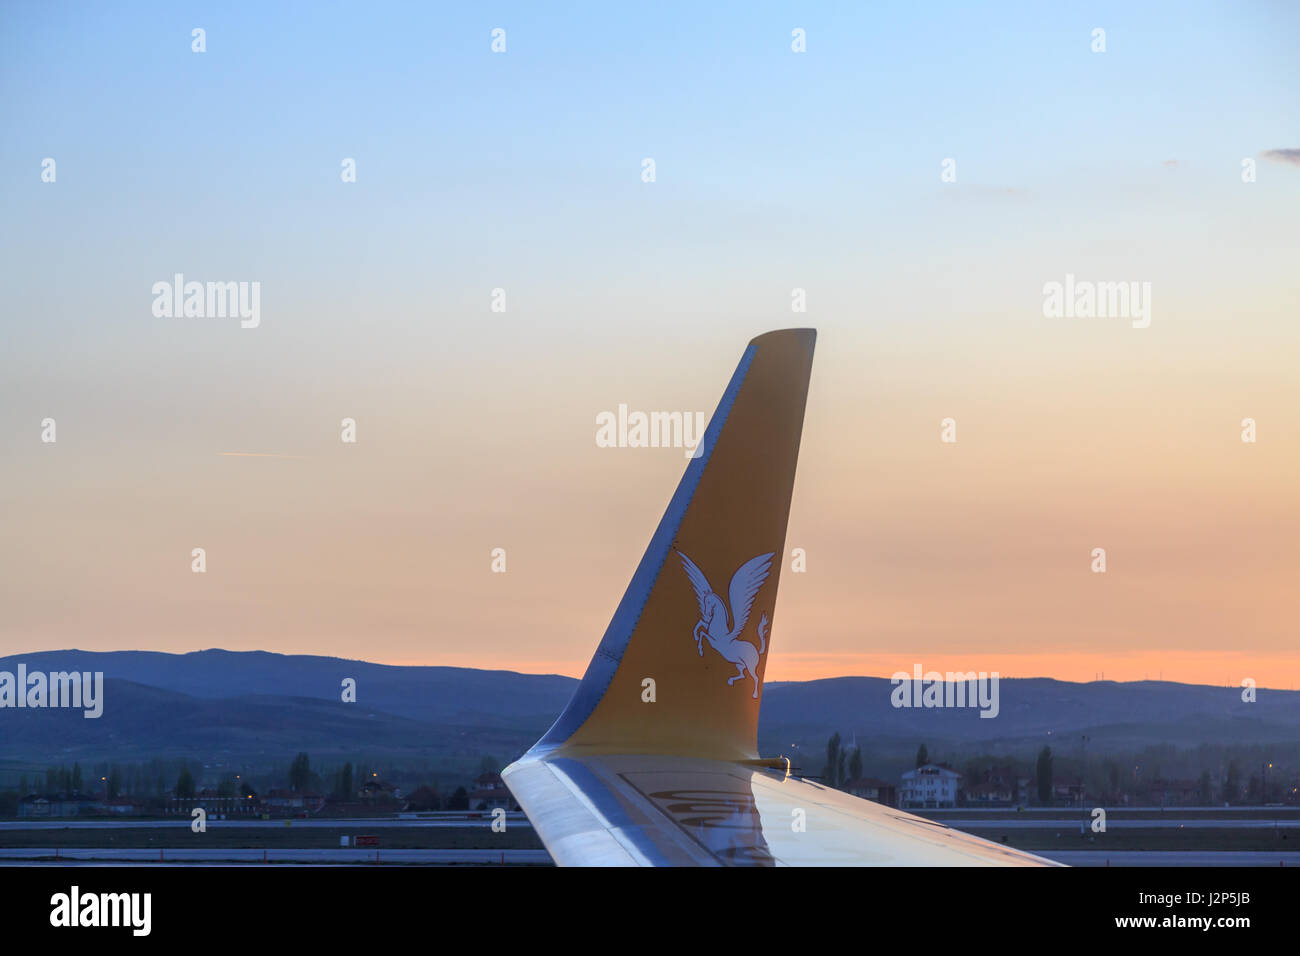 At Esenboga airport in Ankara, Turkey - April 29, 2017 : Pegasus airlines plane inside the Esenboga airport during sunset Stock Photo